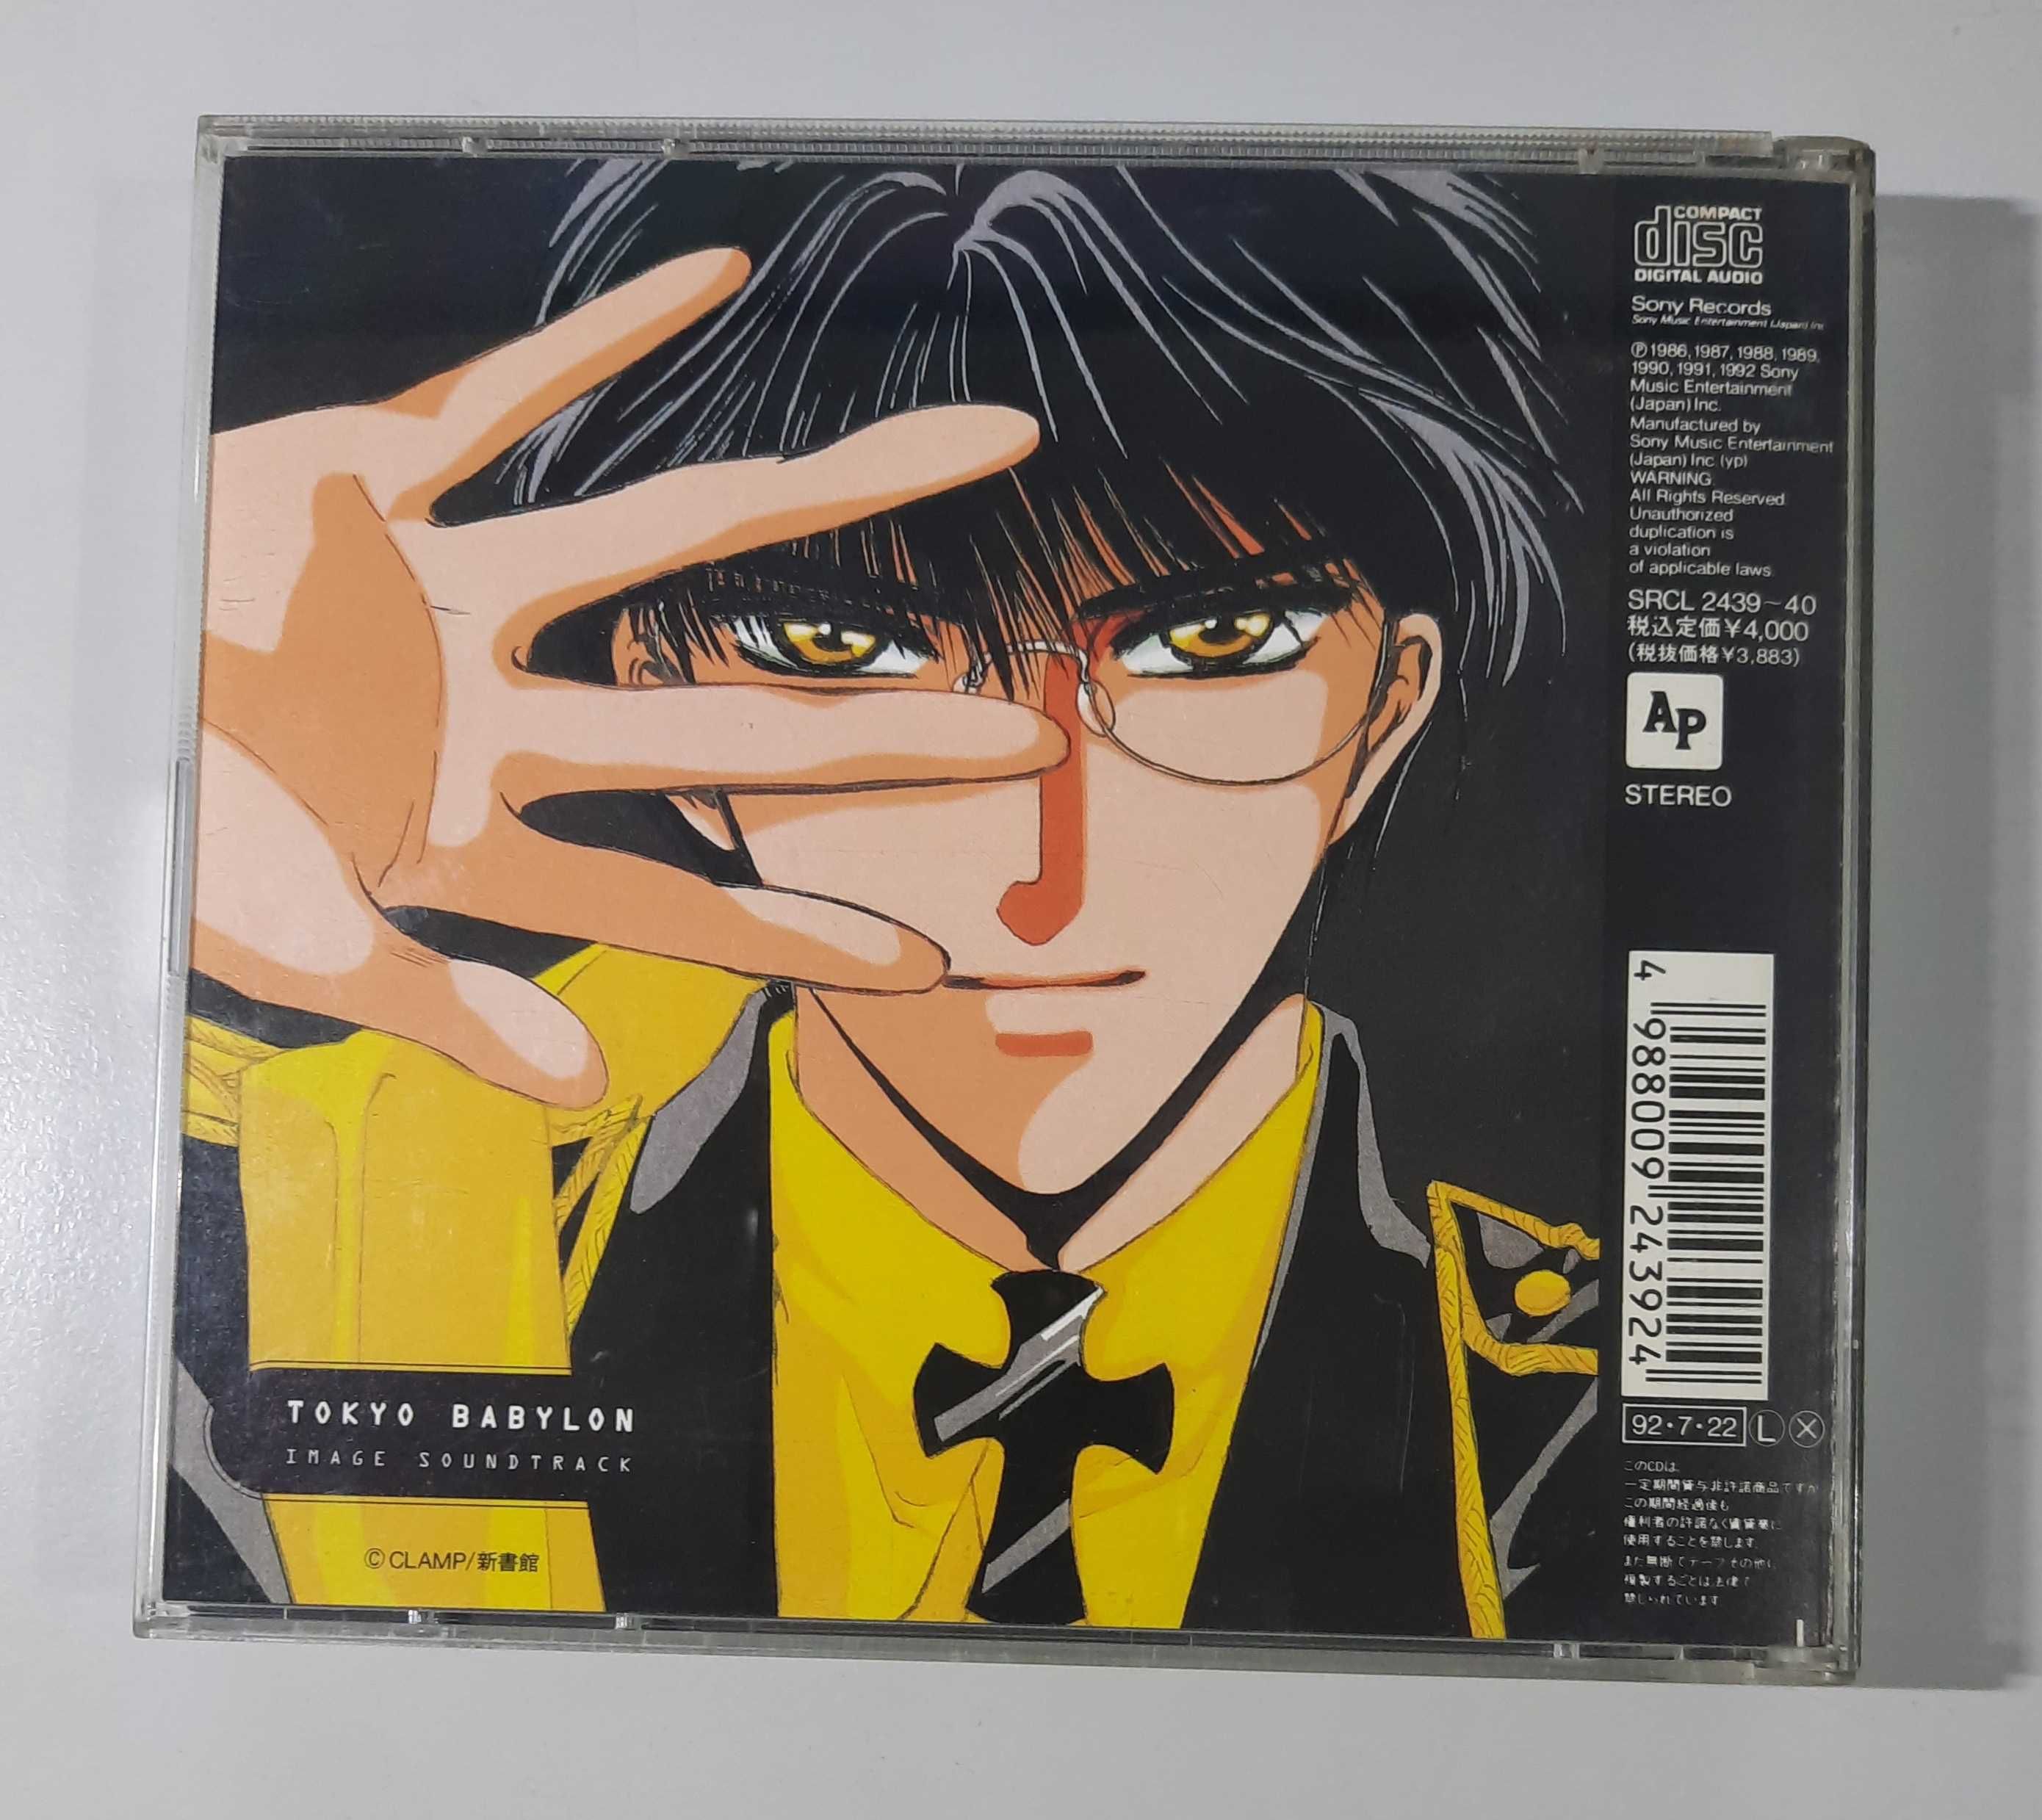 Tokyo Babylon Image Soundtrack [OST anime]